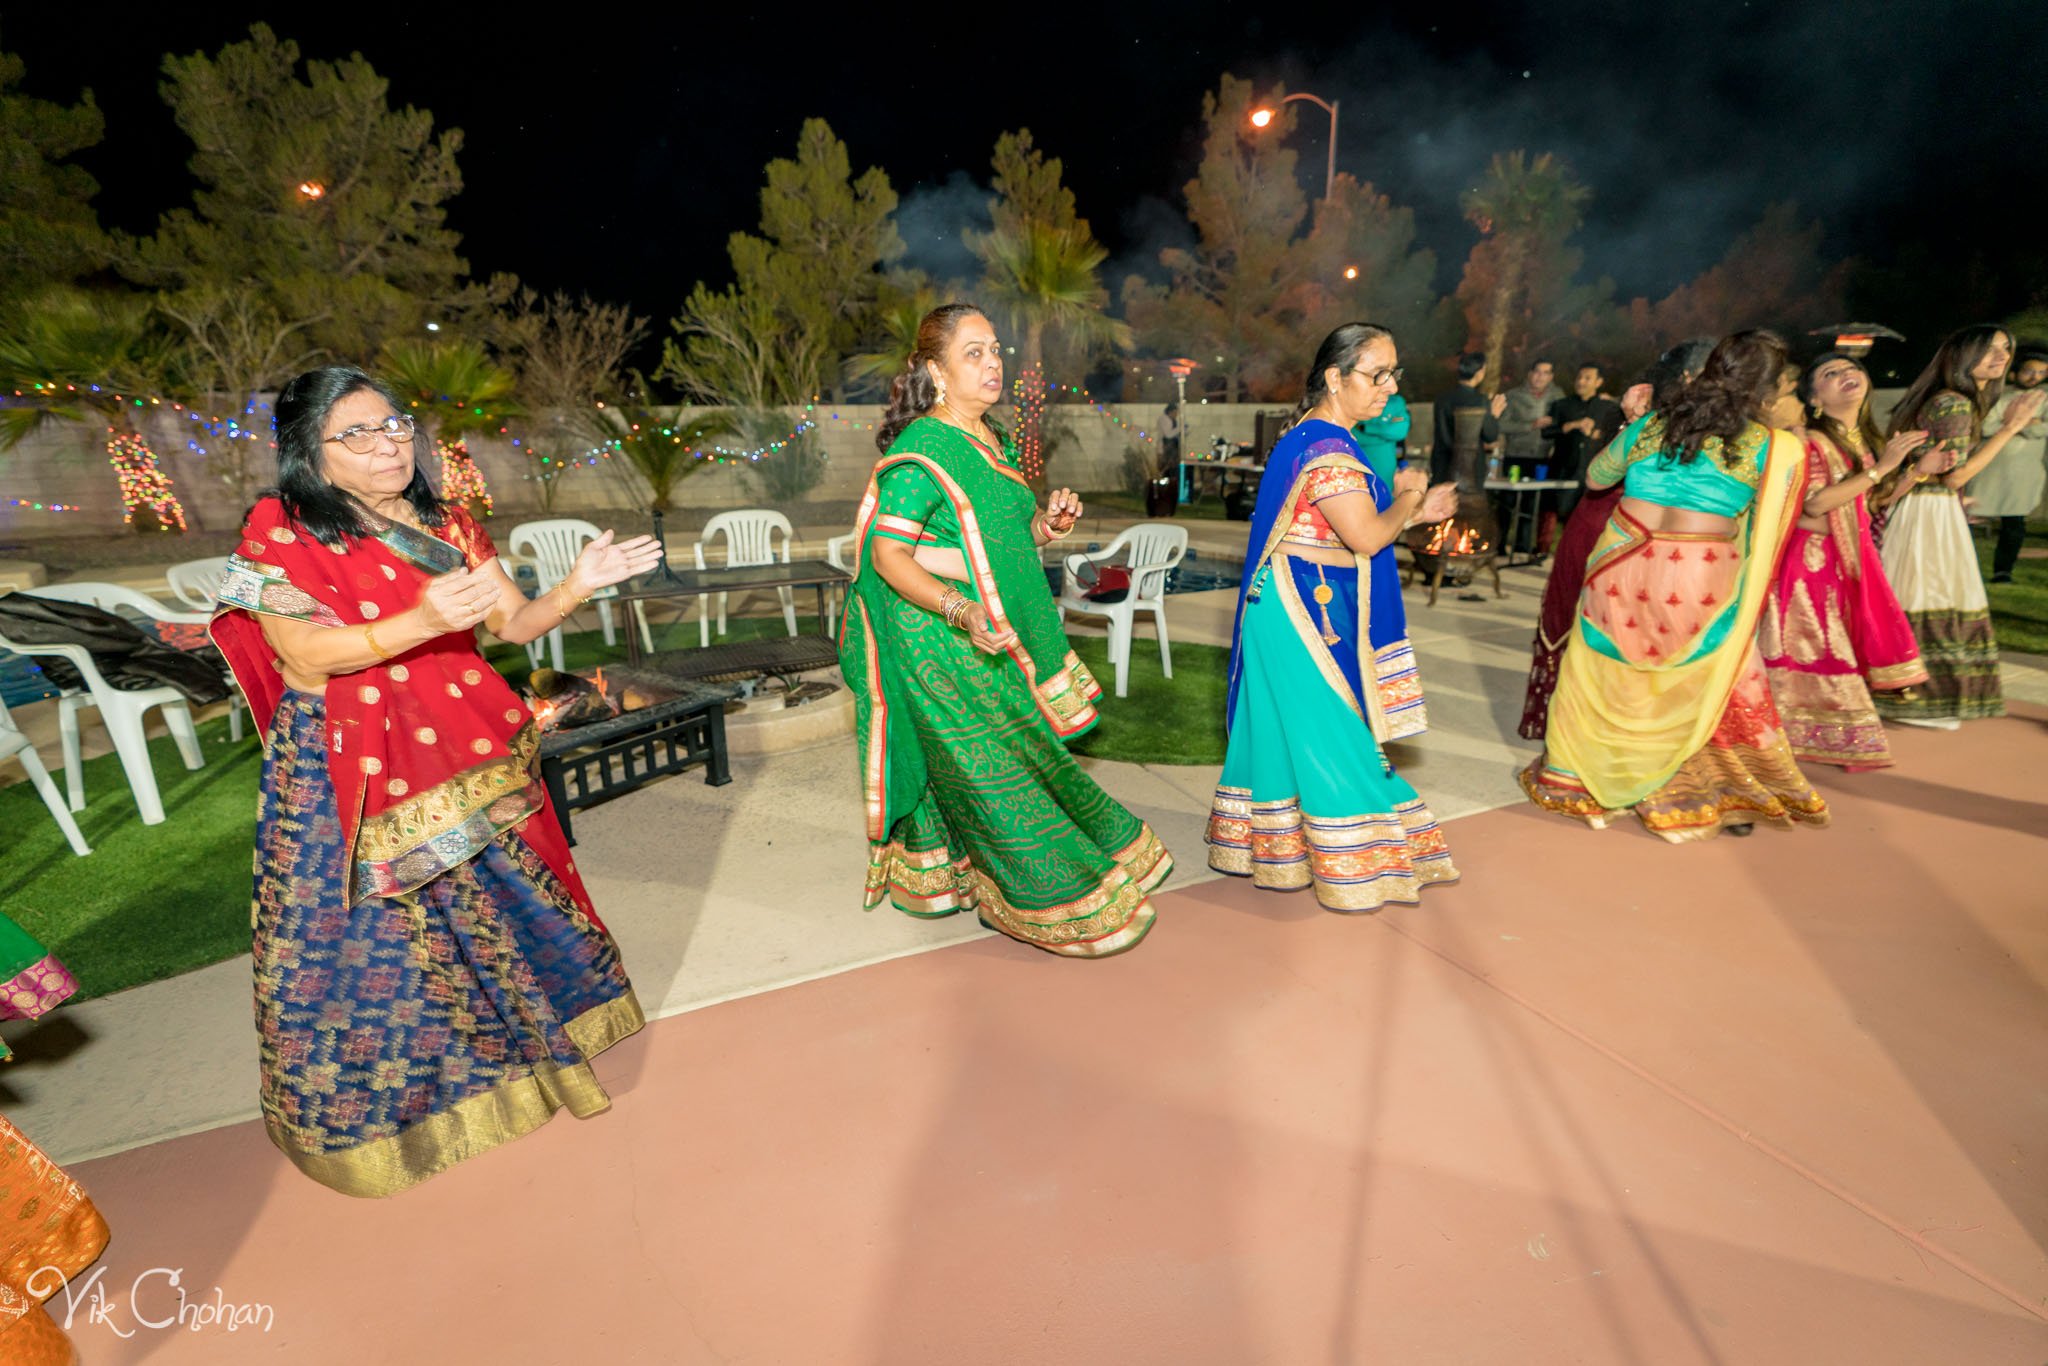 2022-02-04-Hely-&-Parth-Garba-Night-Indian-Wedding-Vik-Chohan-Photography-Photo-Booth-Social-Media-VCP-094.jpg